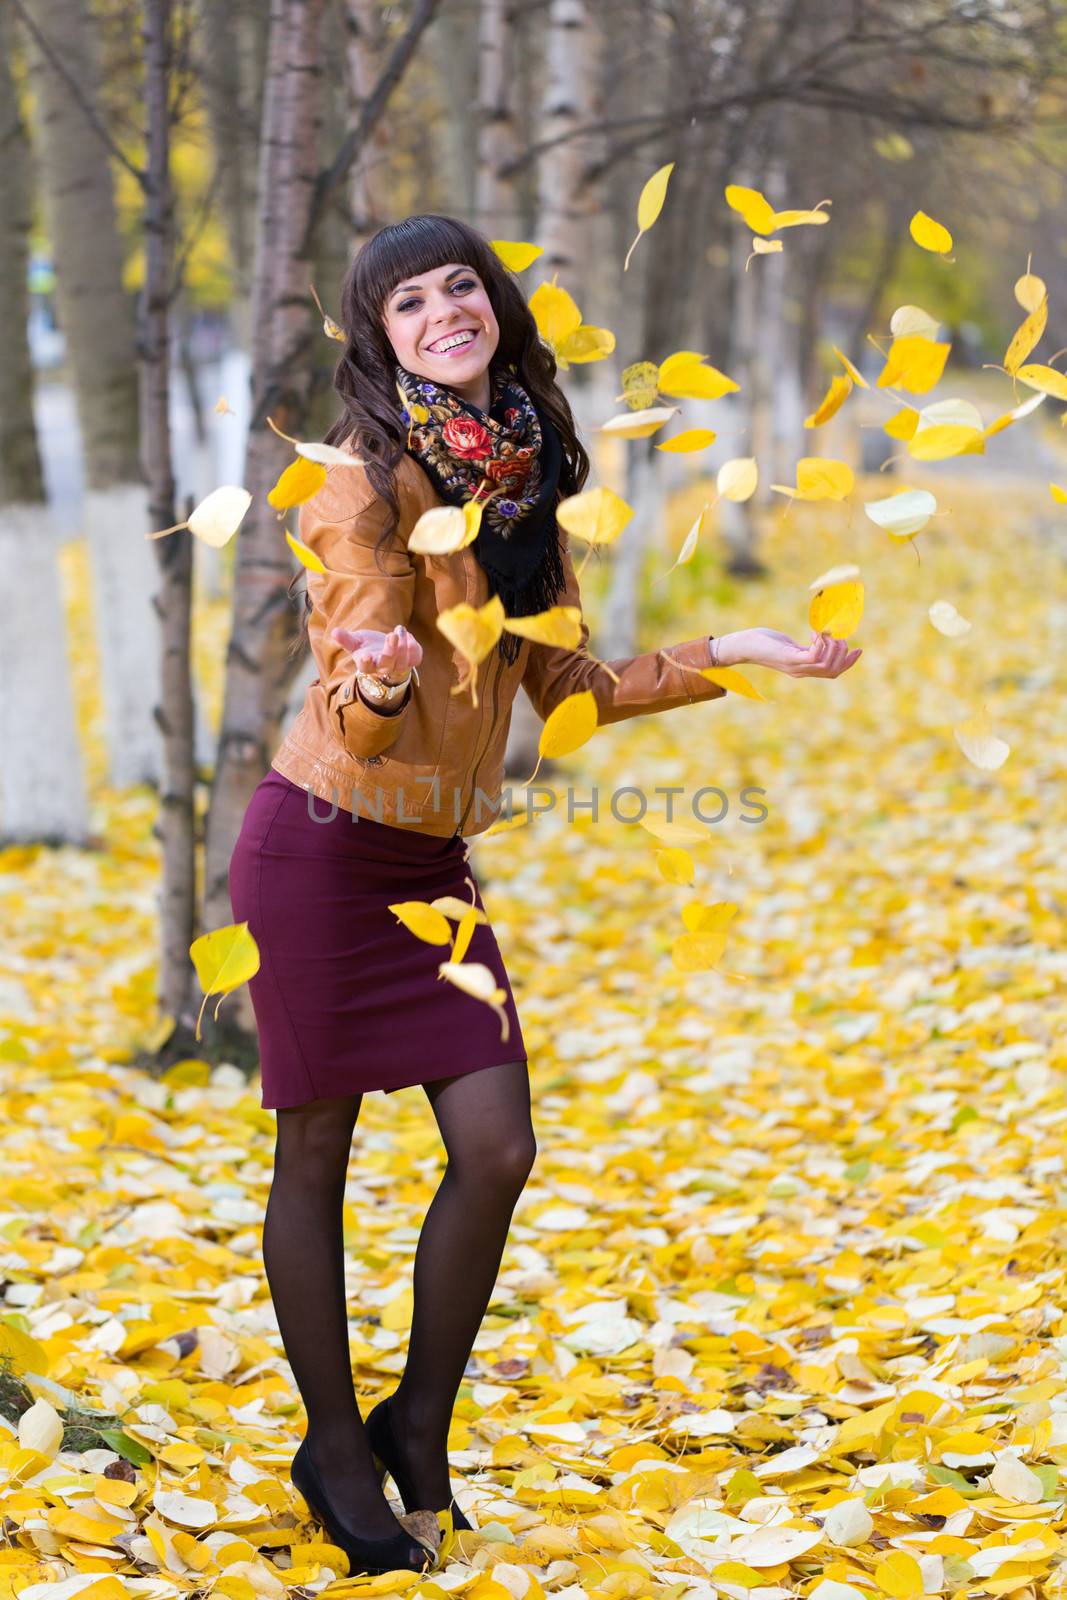 Autumn Leaves - Stock Image by RuslanOmega